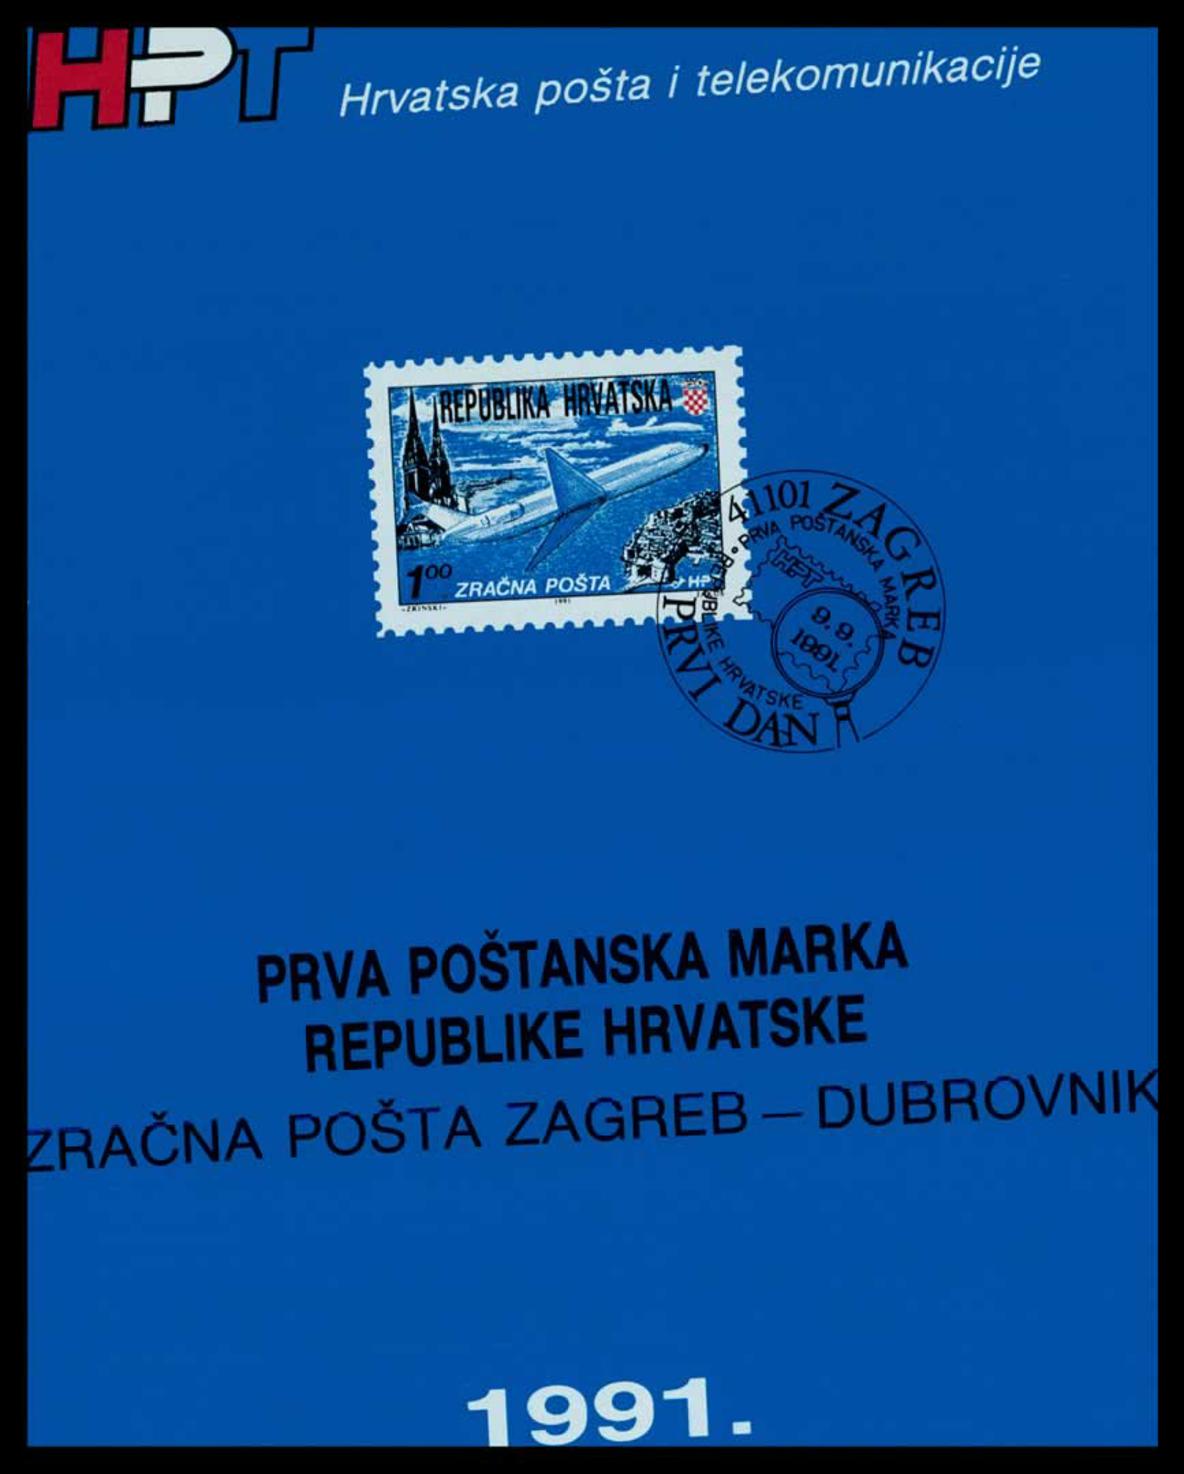 <b>Prva poštanska marka Republike Hrvatske</b>, 9. rujna 1991.<br><br>
HR-HDA-1741. Ured predsjednika RH Franje Tuđmana. Plakati, kalendari, skice, 55
